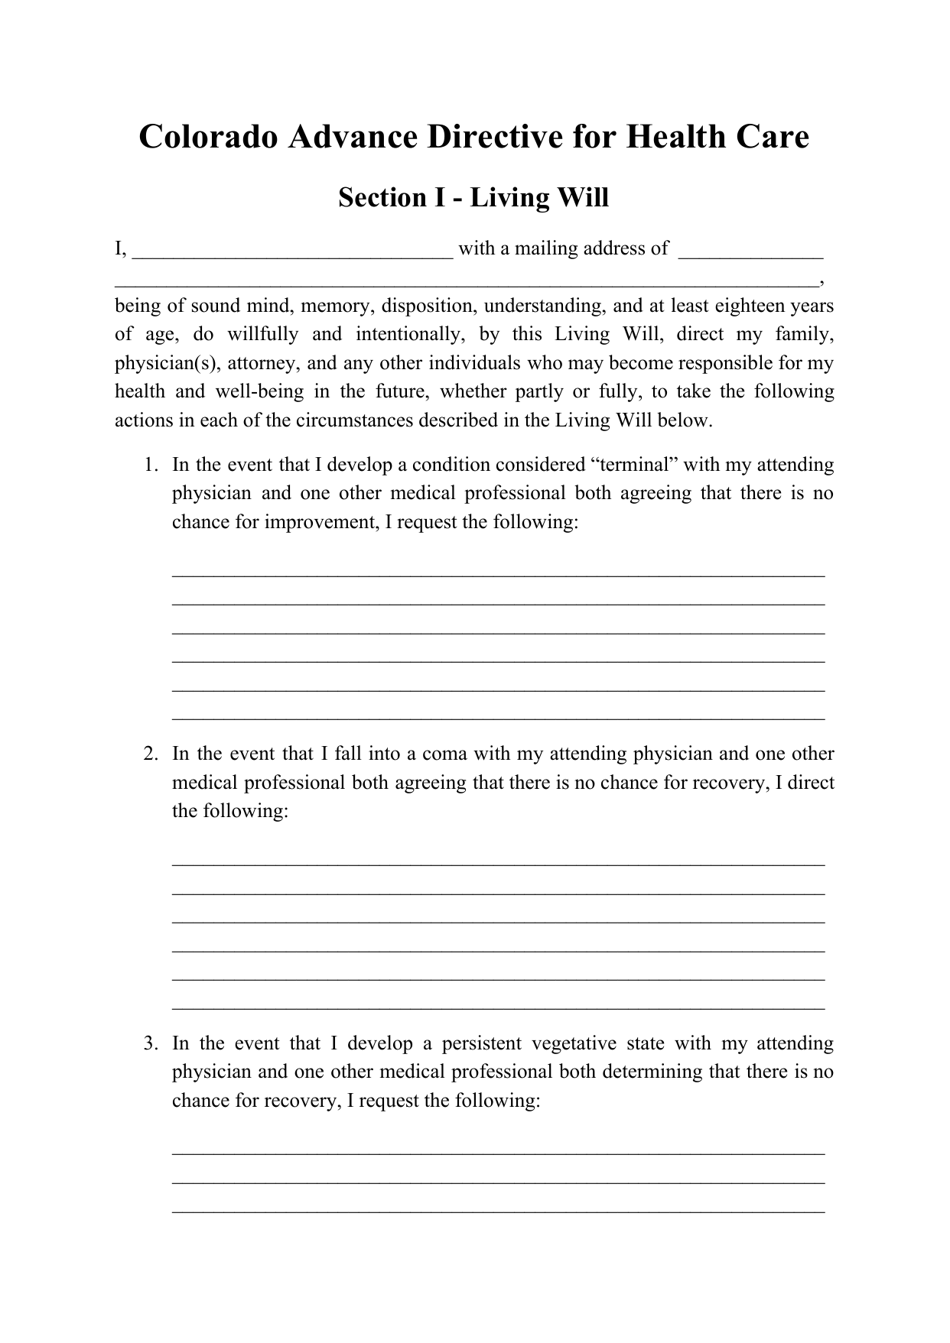 Advance Directive for Health Care Form - Colorado, Page 1